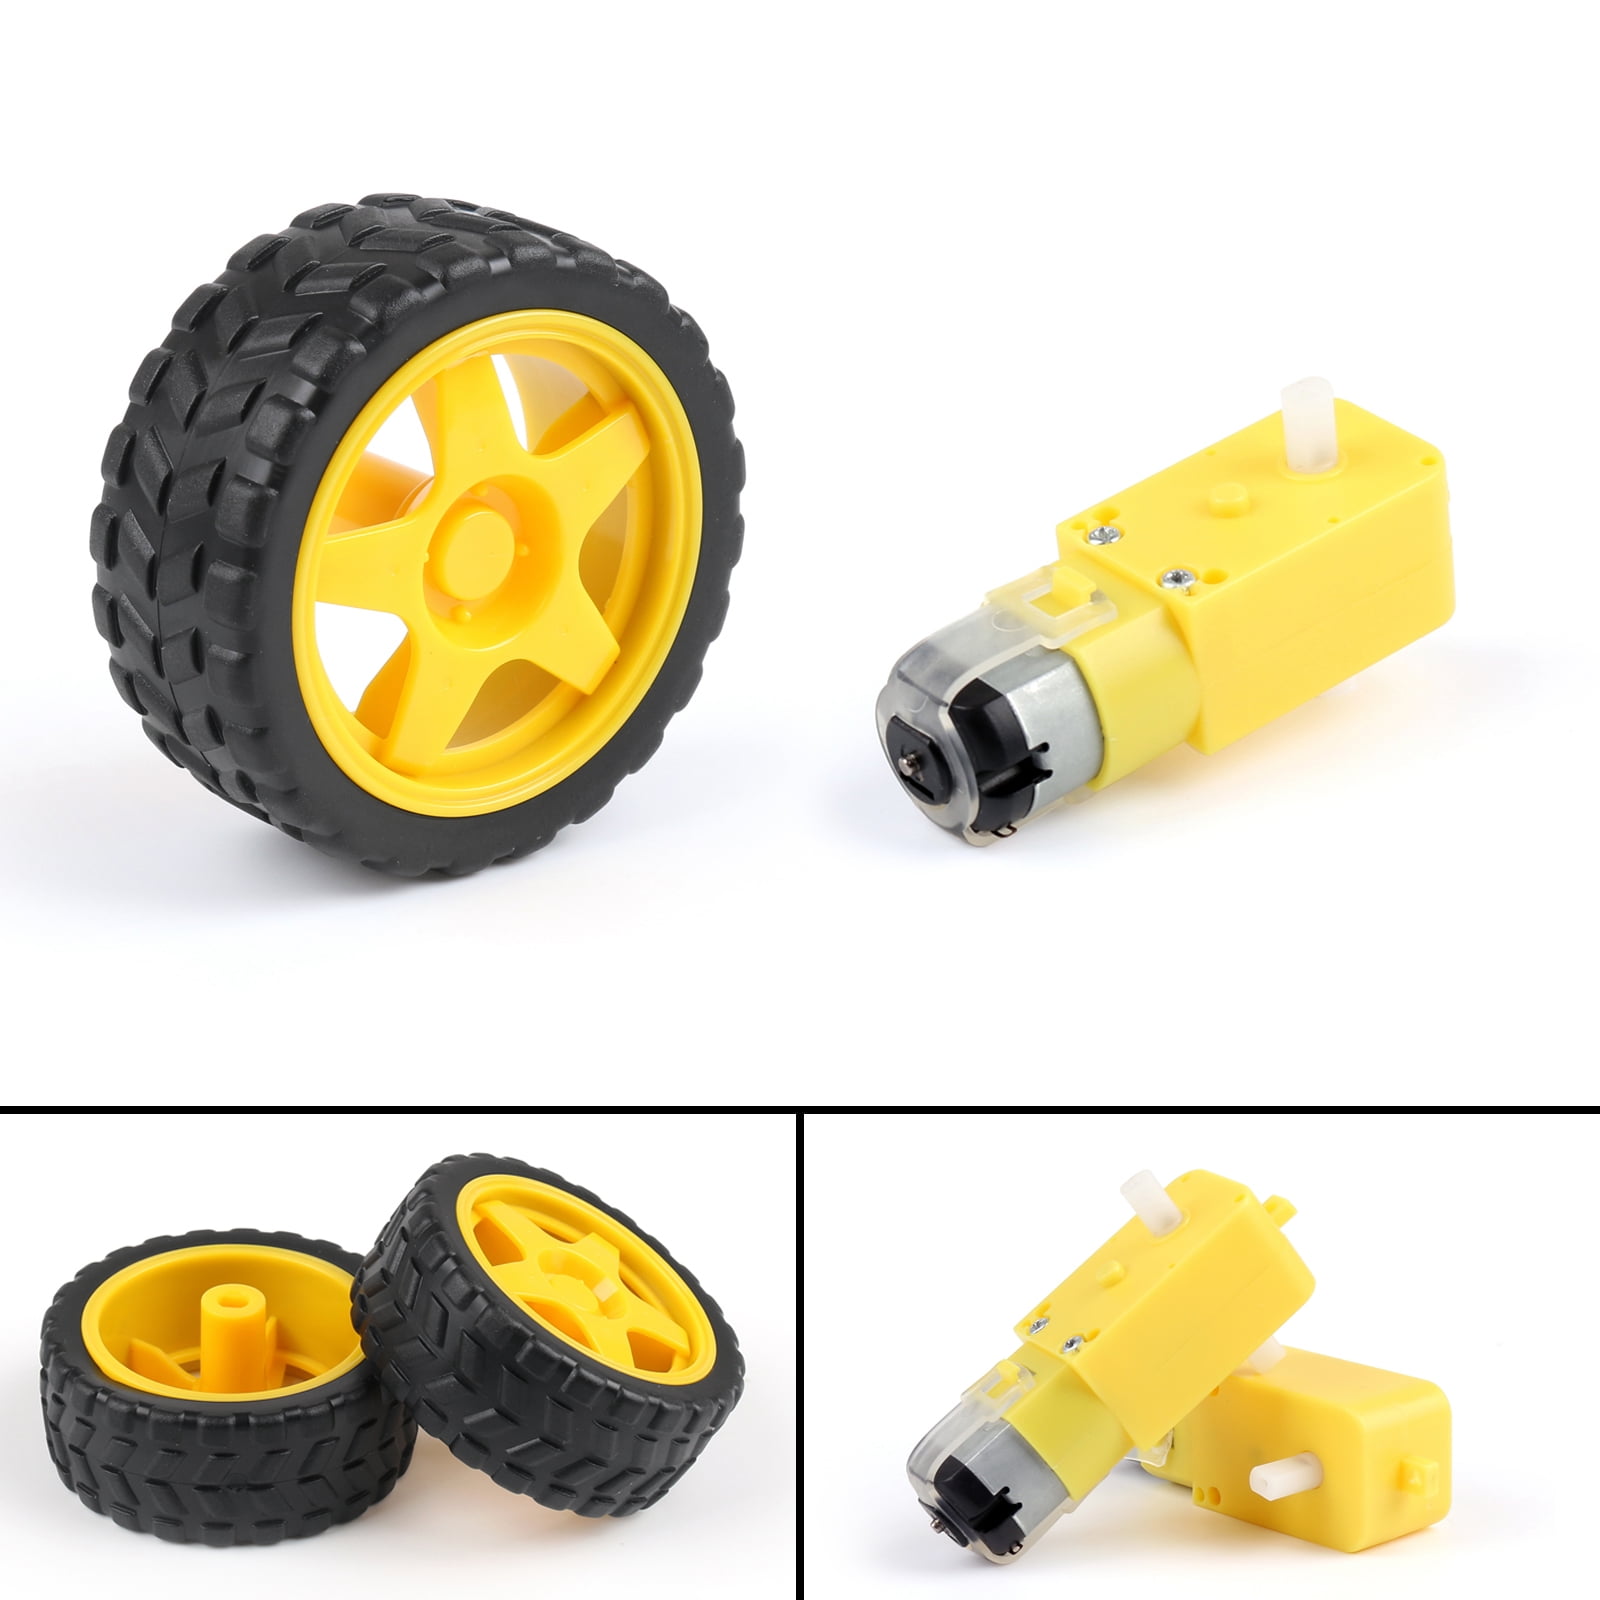 1:48 DC Gear Motor Smart Robot Car Plastic Tire Wheel for Arduino 